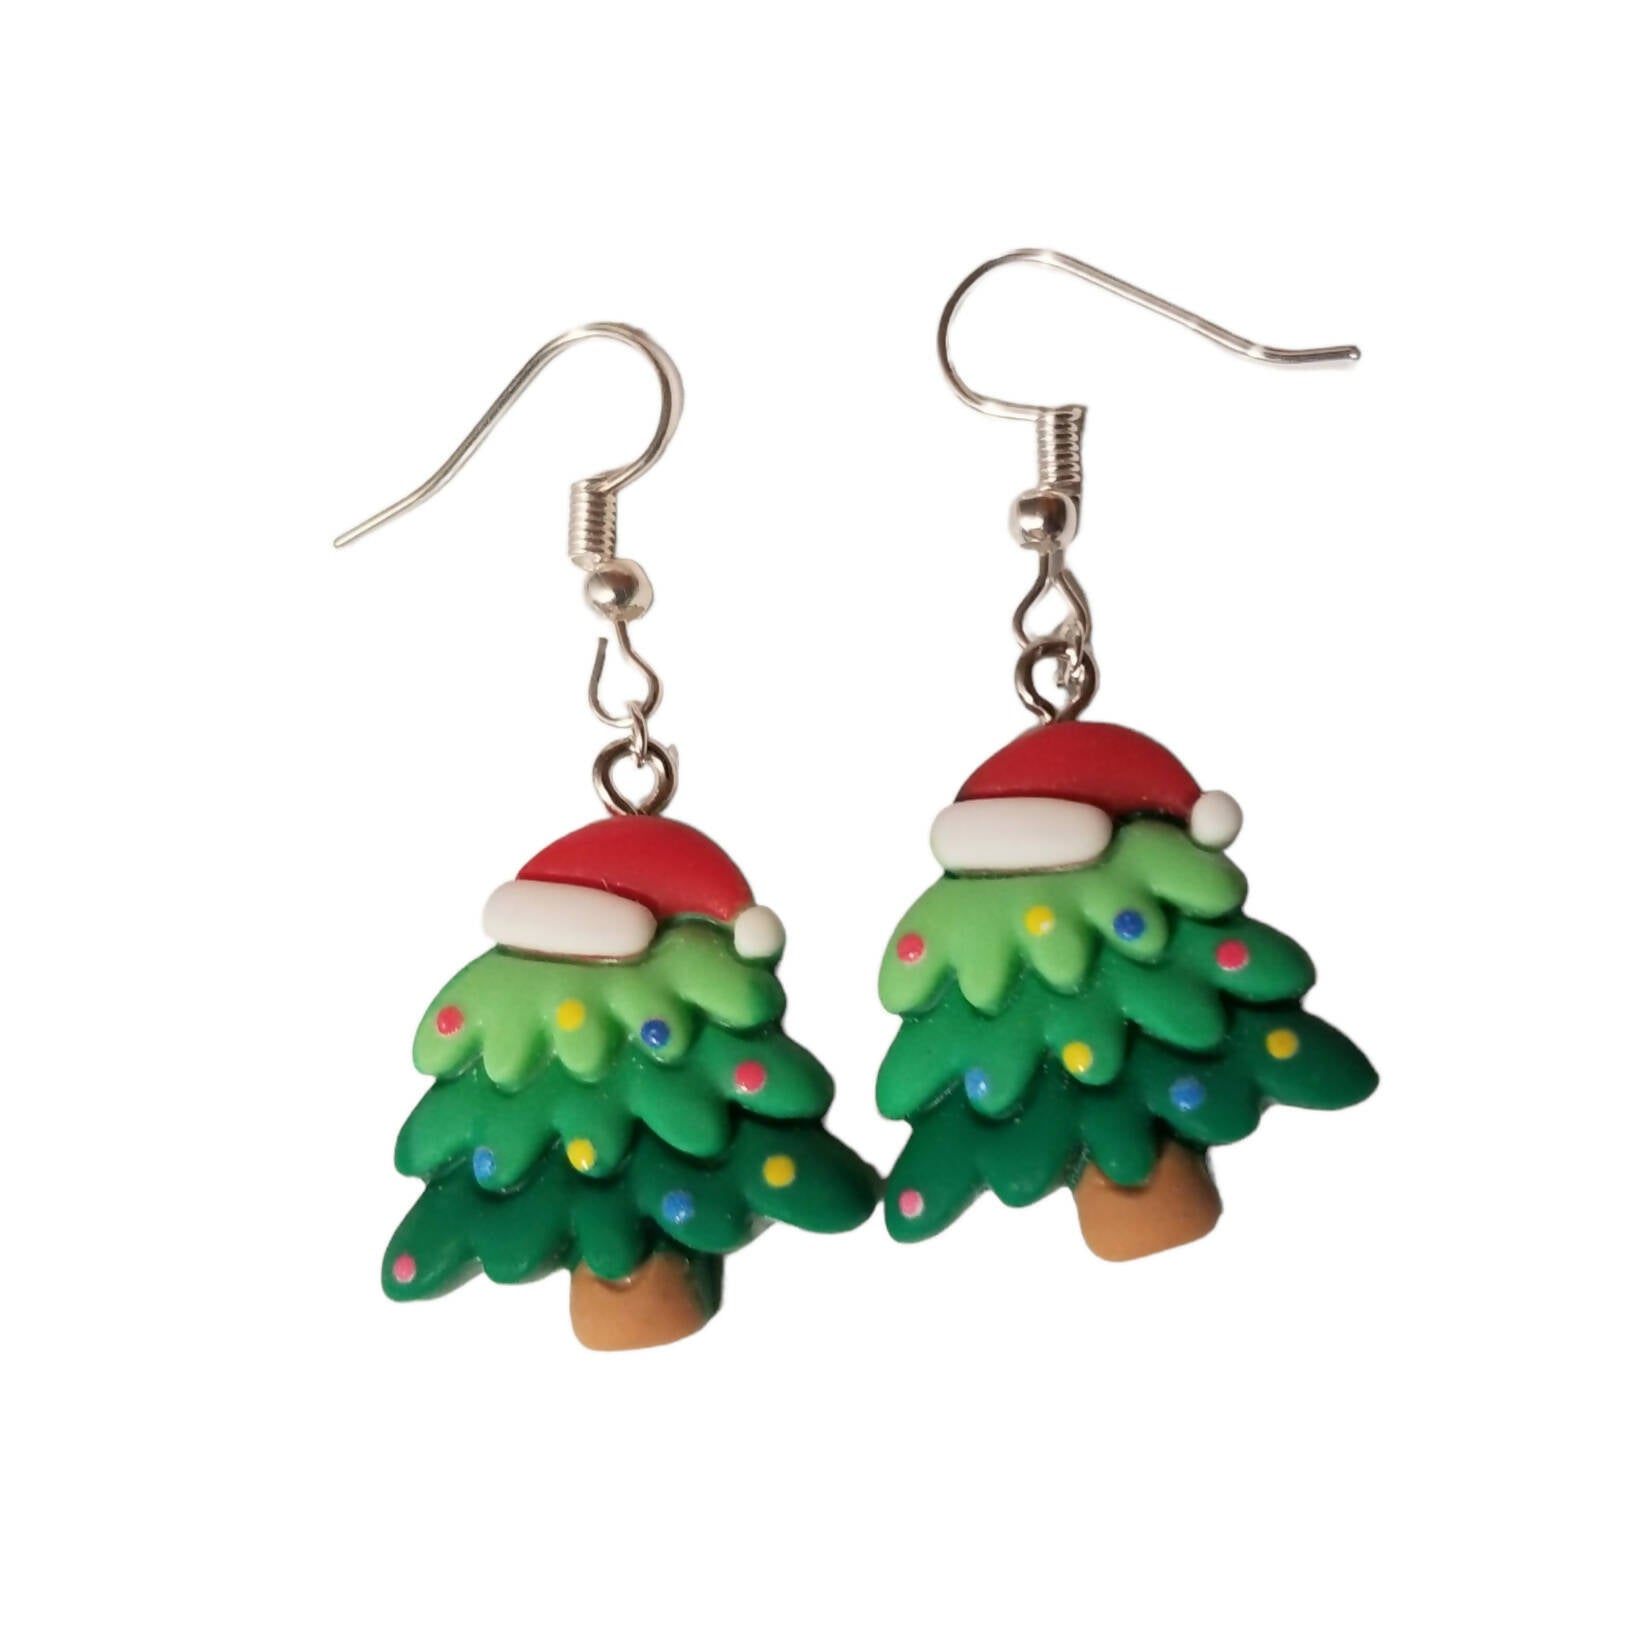 Cartoon Christmas earrings